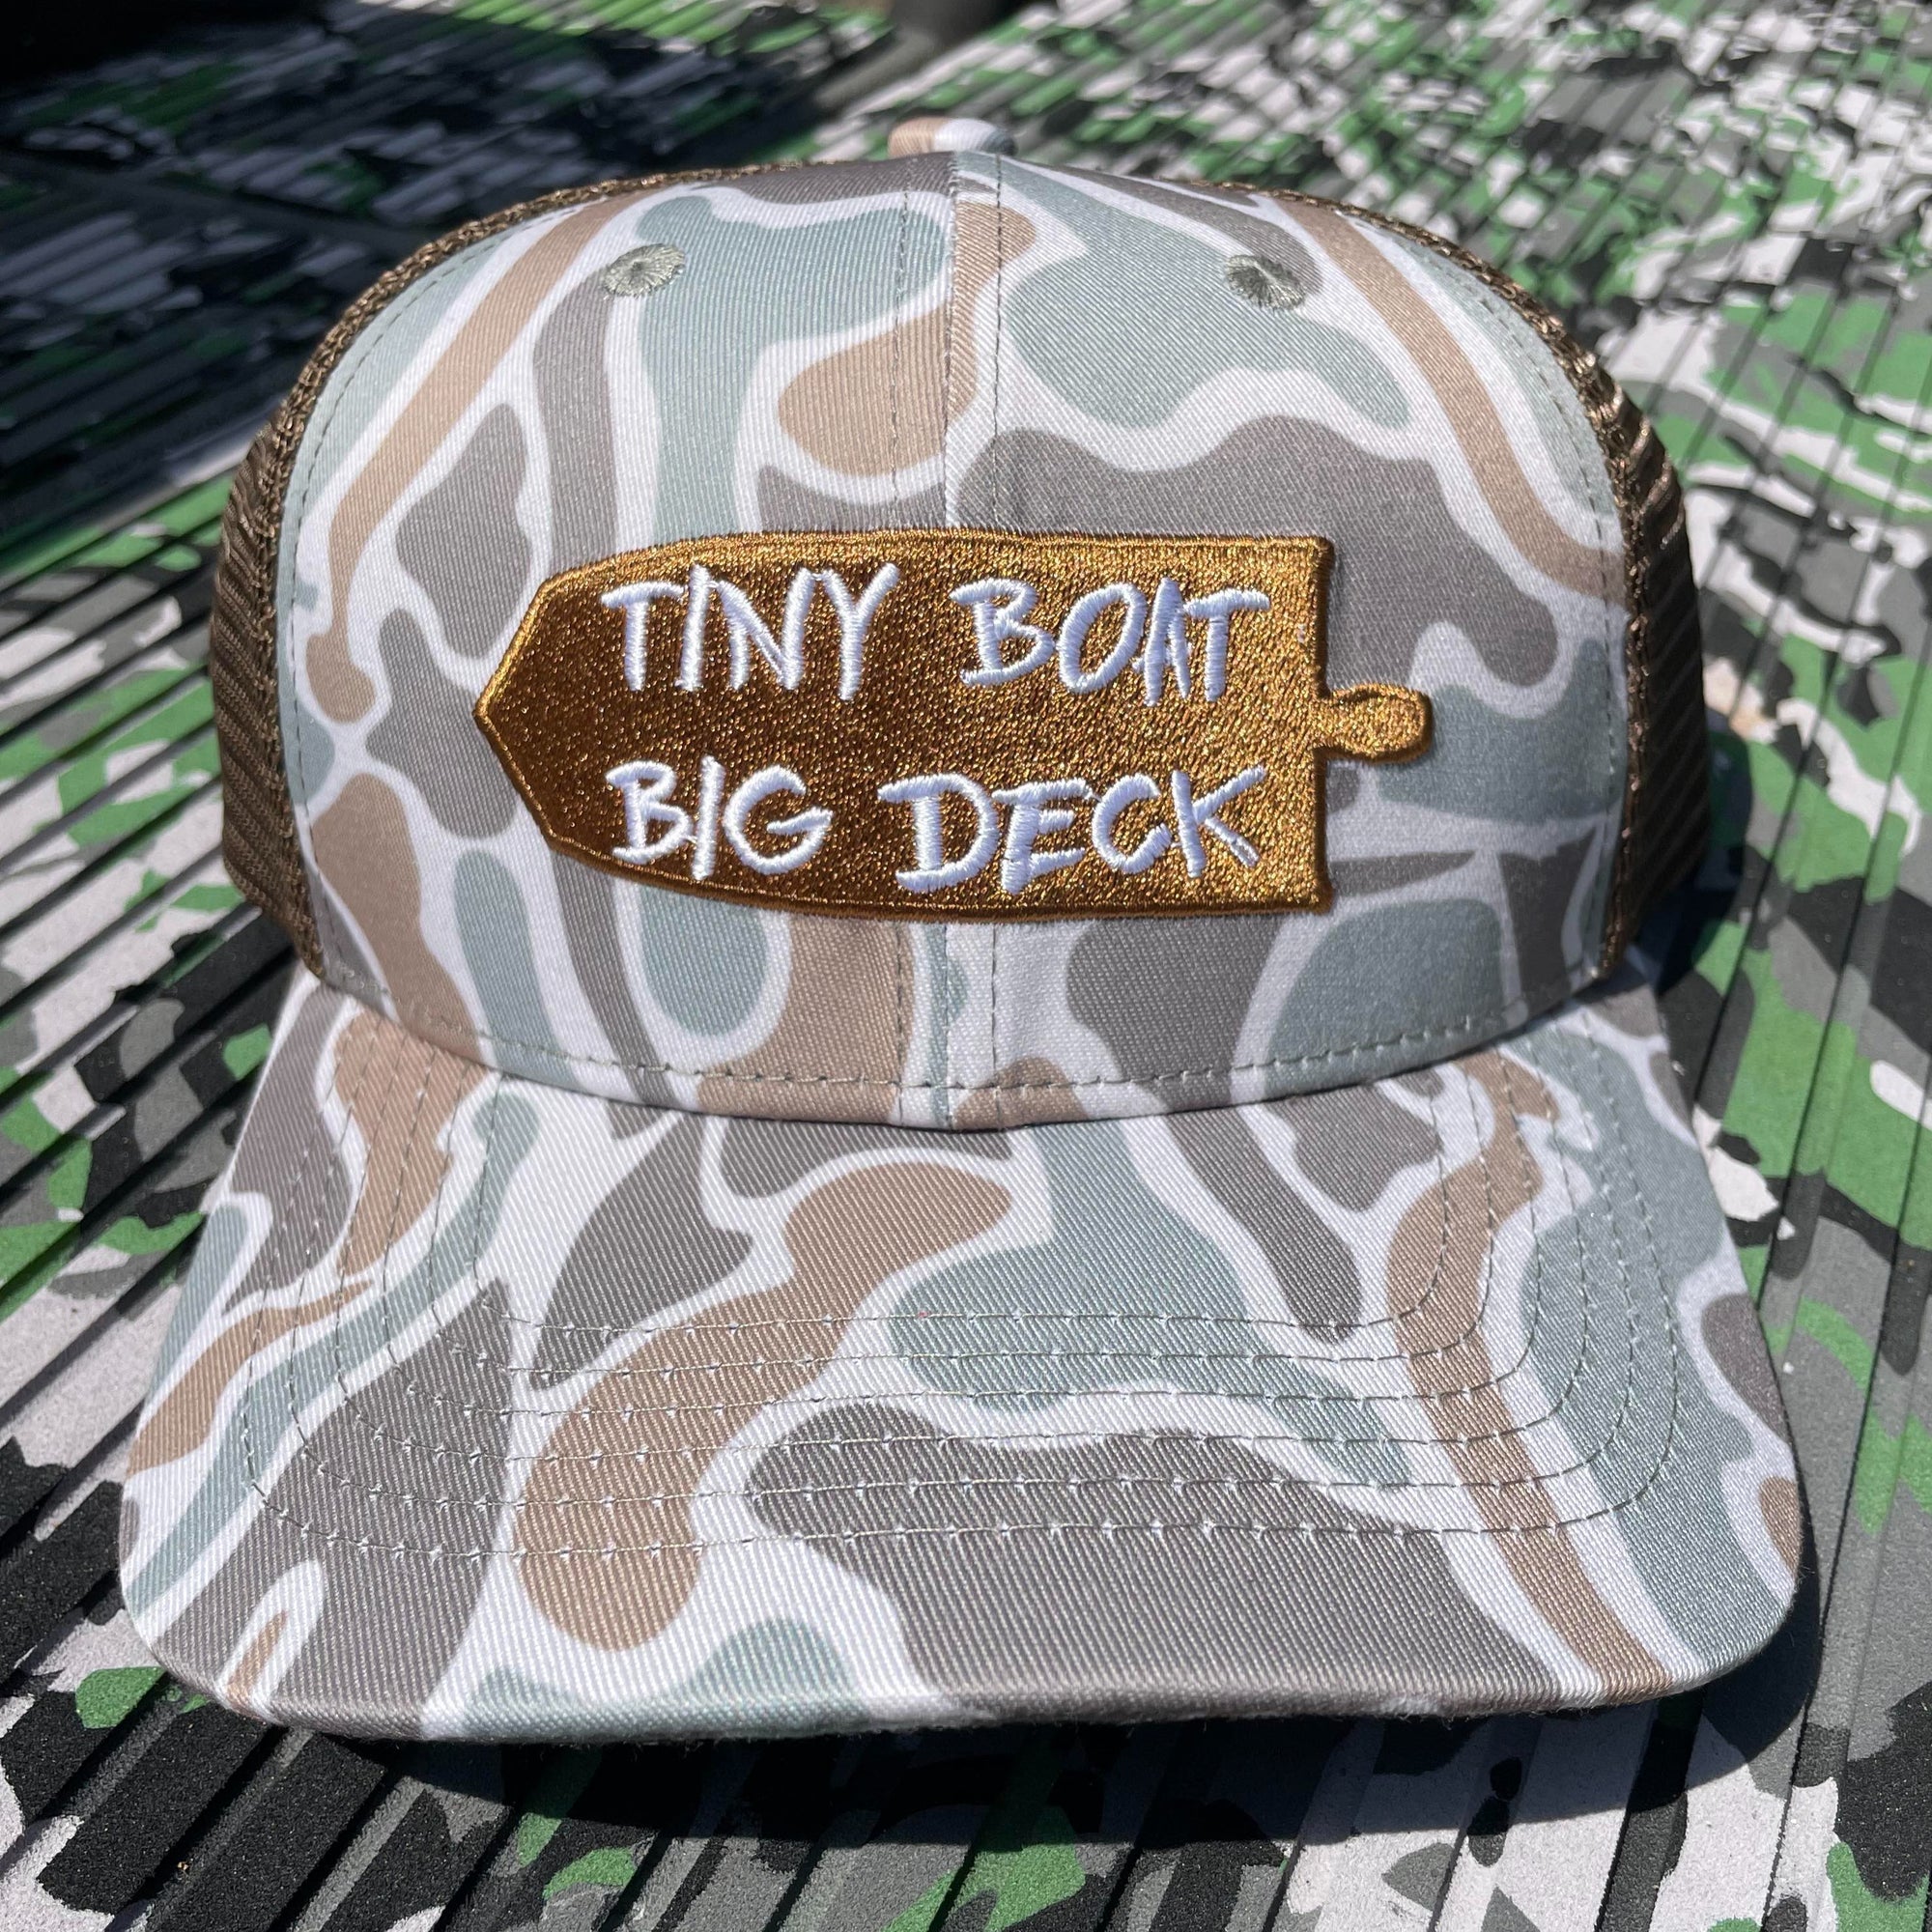 Tiny Boat Big Deck TBNation Tiny Boat Nation Hat